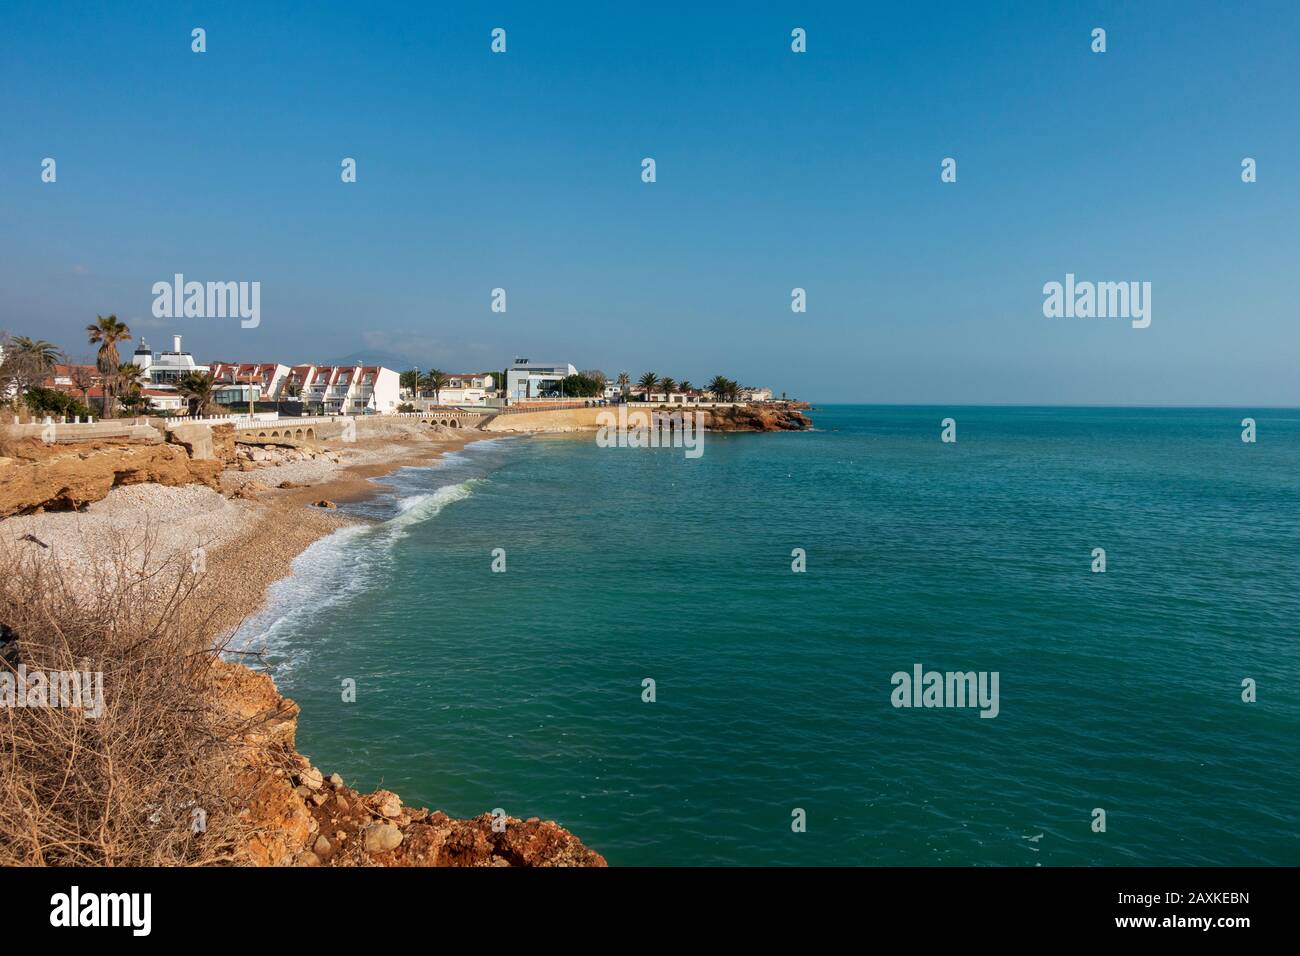 The coast in Vinaroz on a clear day, Costa Azahar, Spain Stock Photo